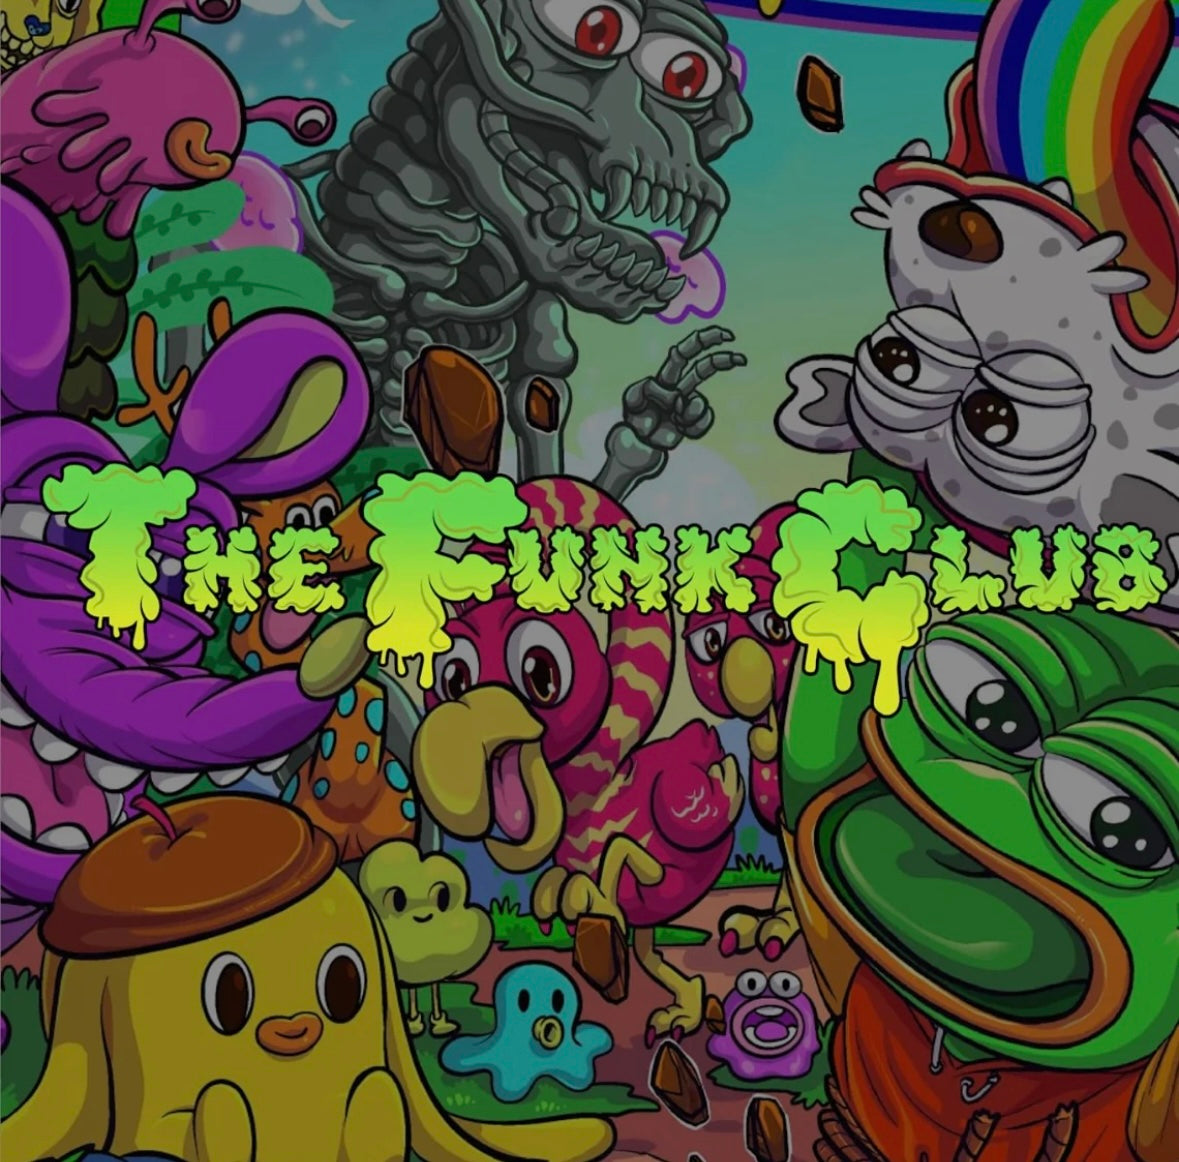 Thefunkclub1